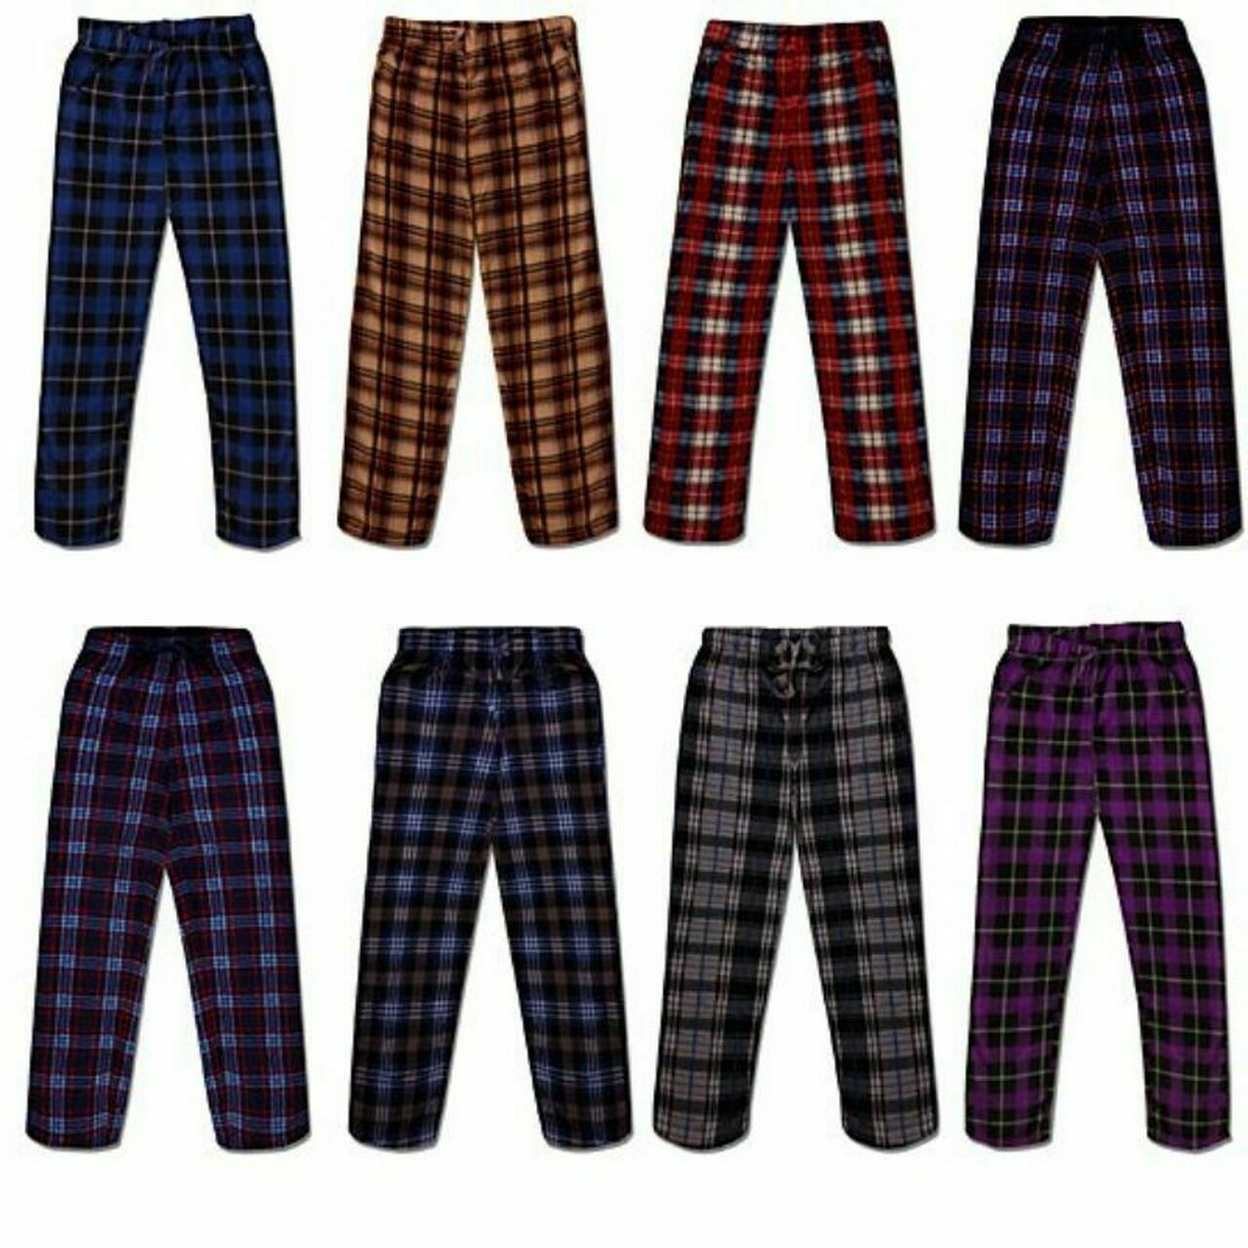 2-Pack: Men's Ultra Soft Cozy Flannel Fleece Plaid Pajama Sleep Bottom Lounge Pants - Black & Red, Medium